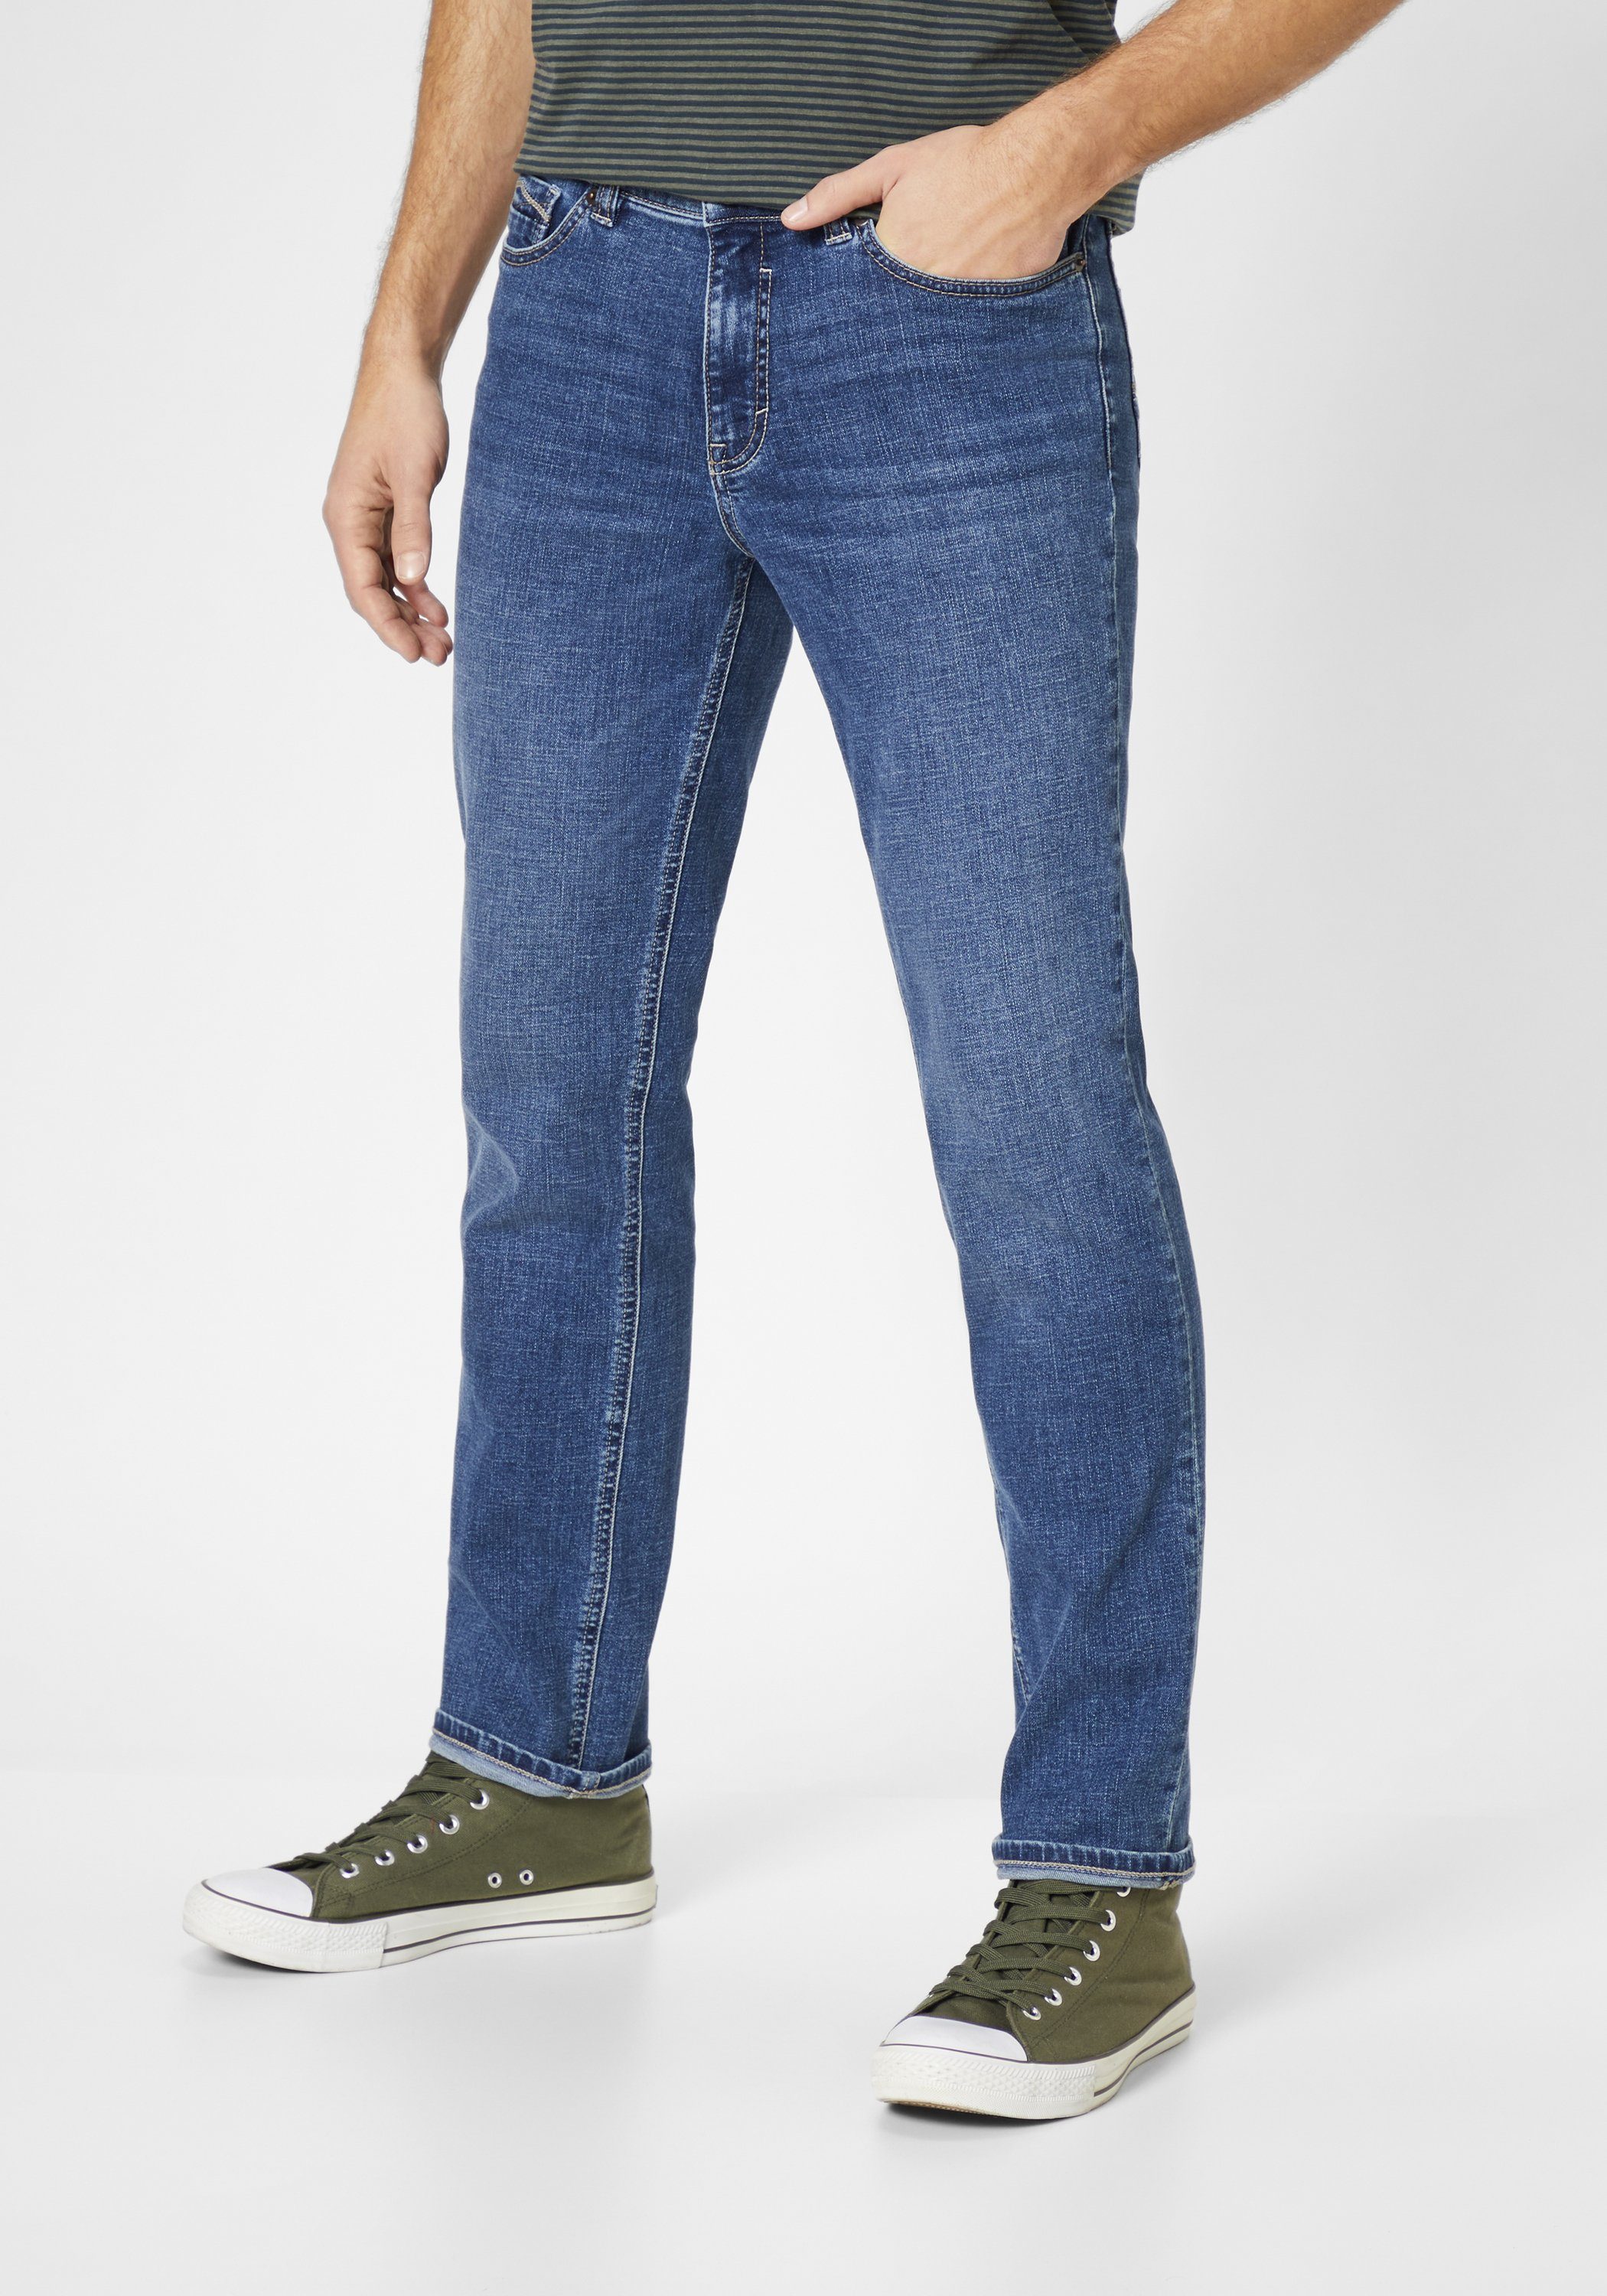 & Motion mid PIPE Elastizität Paddock's Comfort Jeans blue Slim-fit-Jeans Slim-Fit